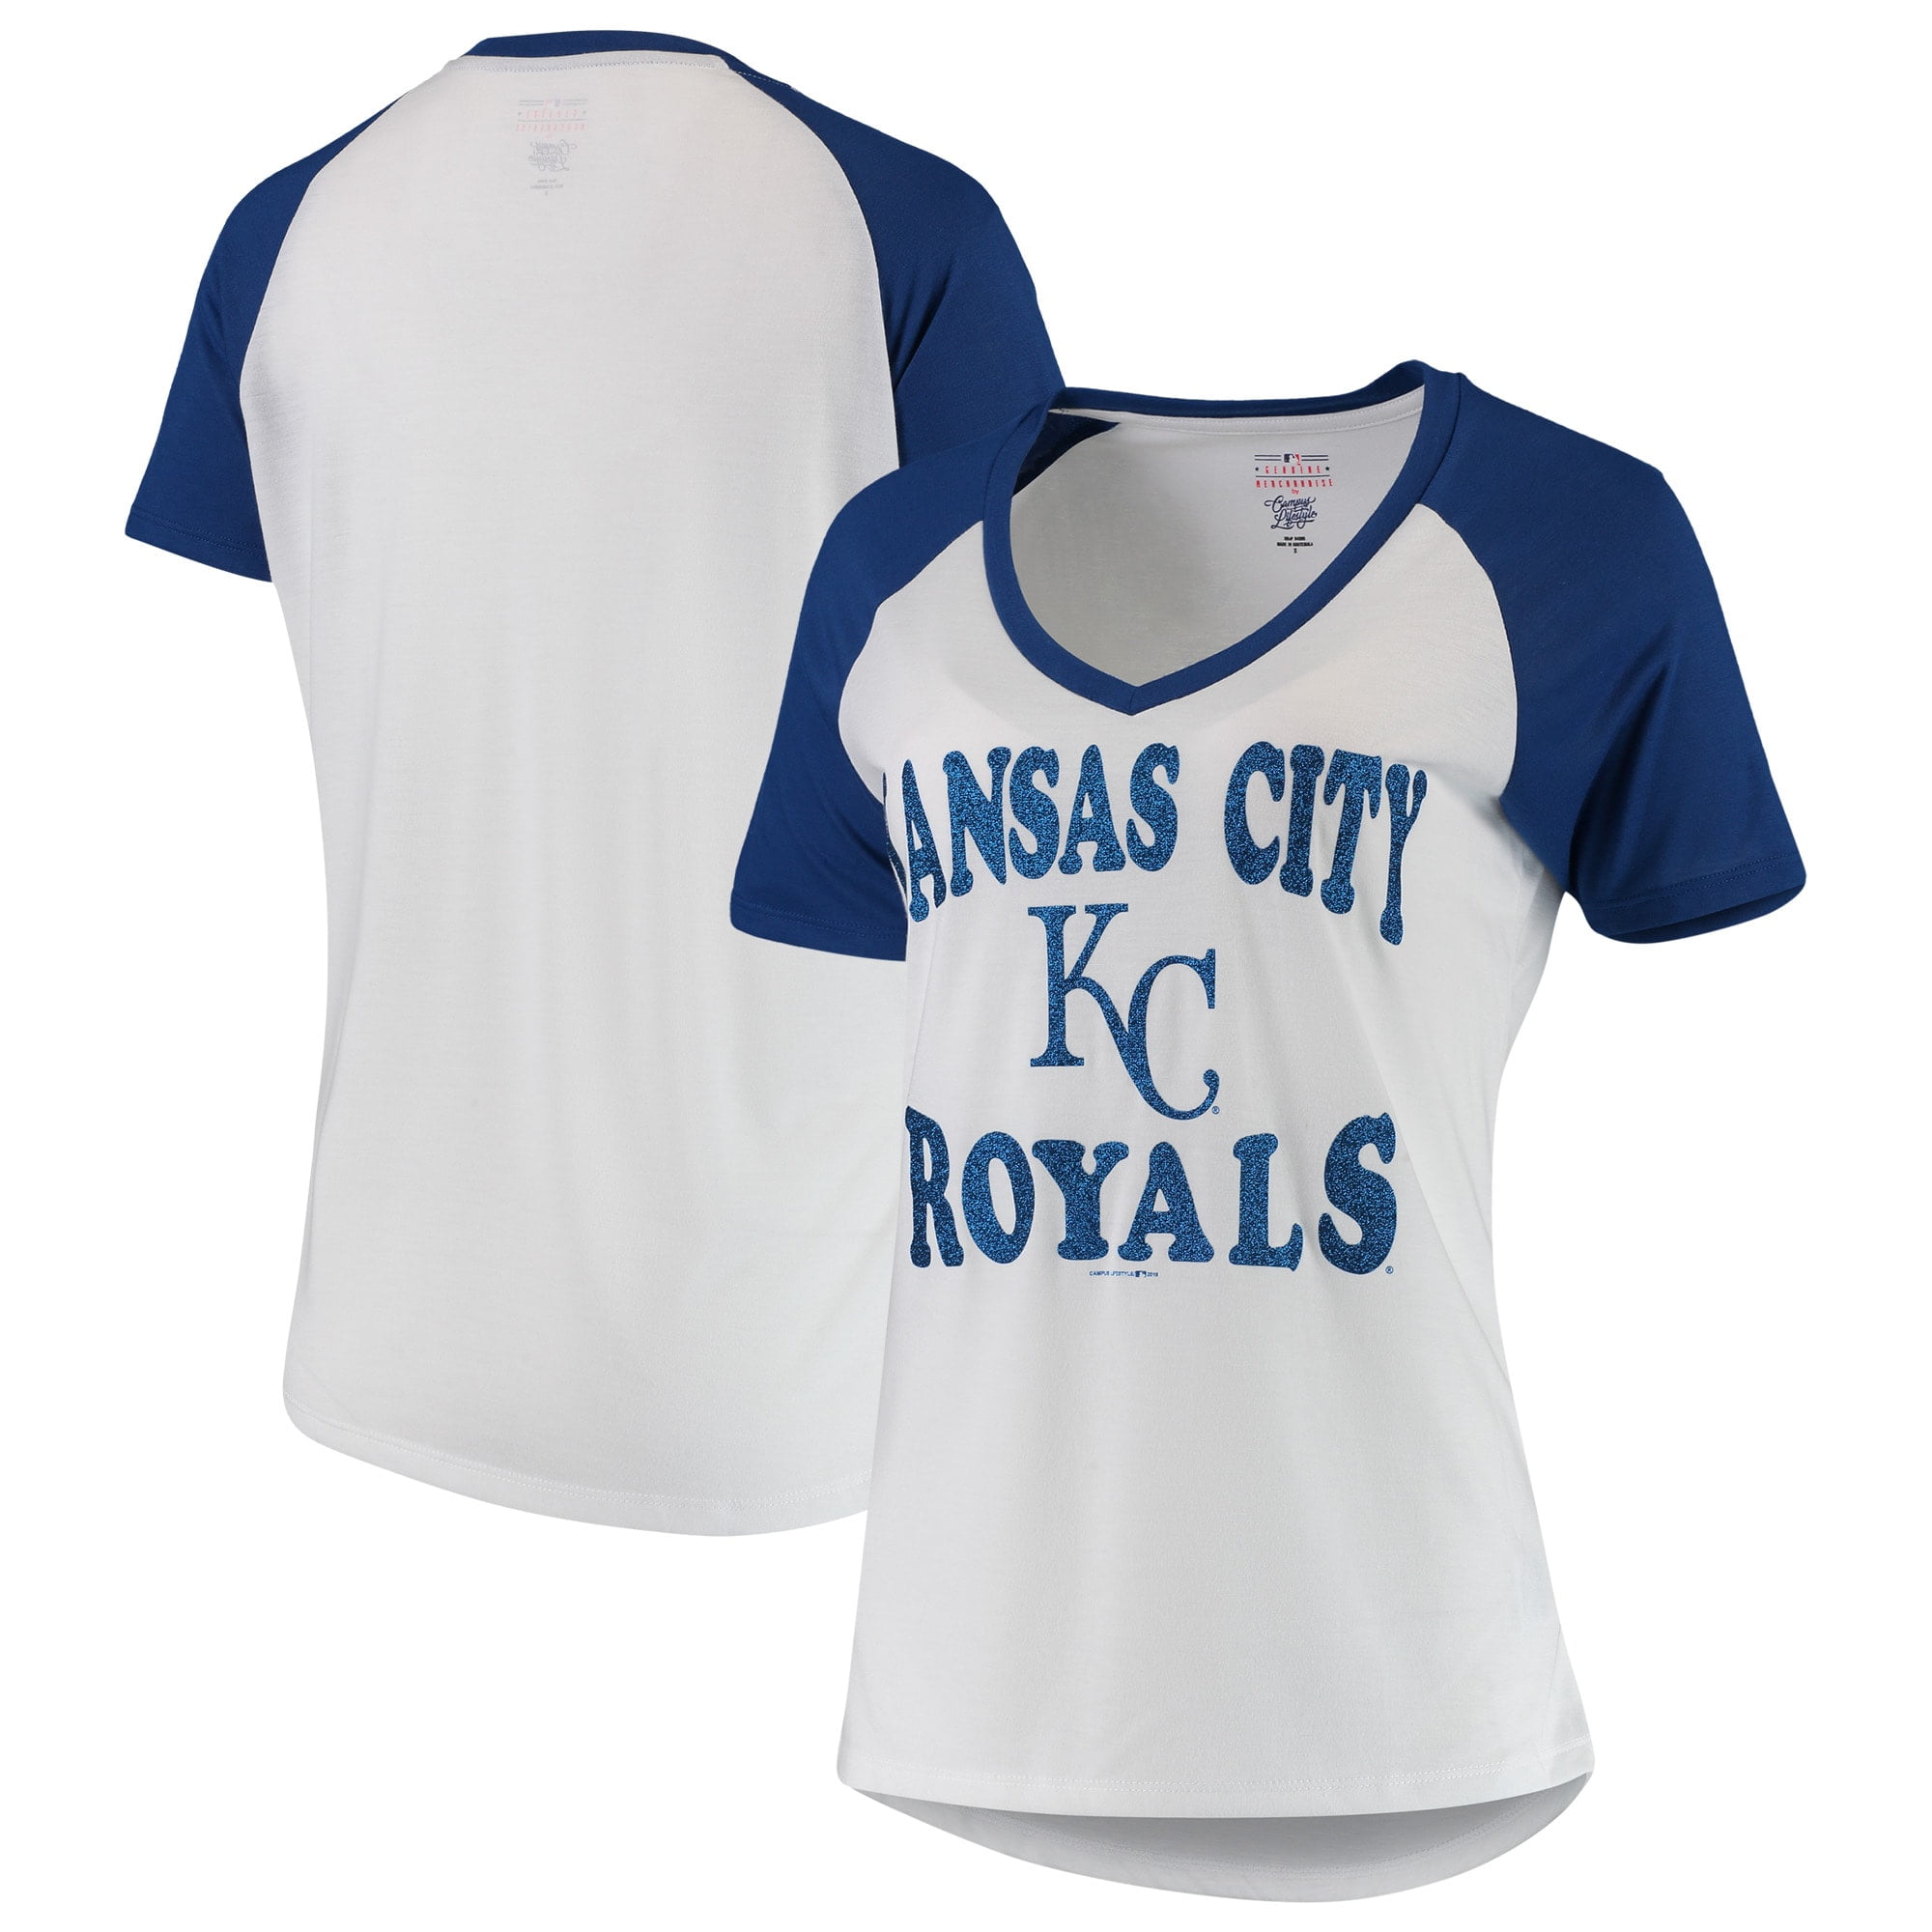 cool kc royals shirts